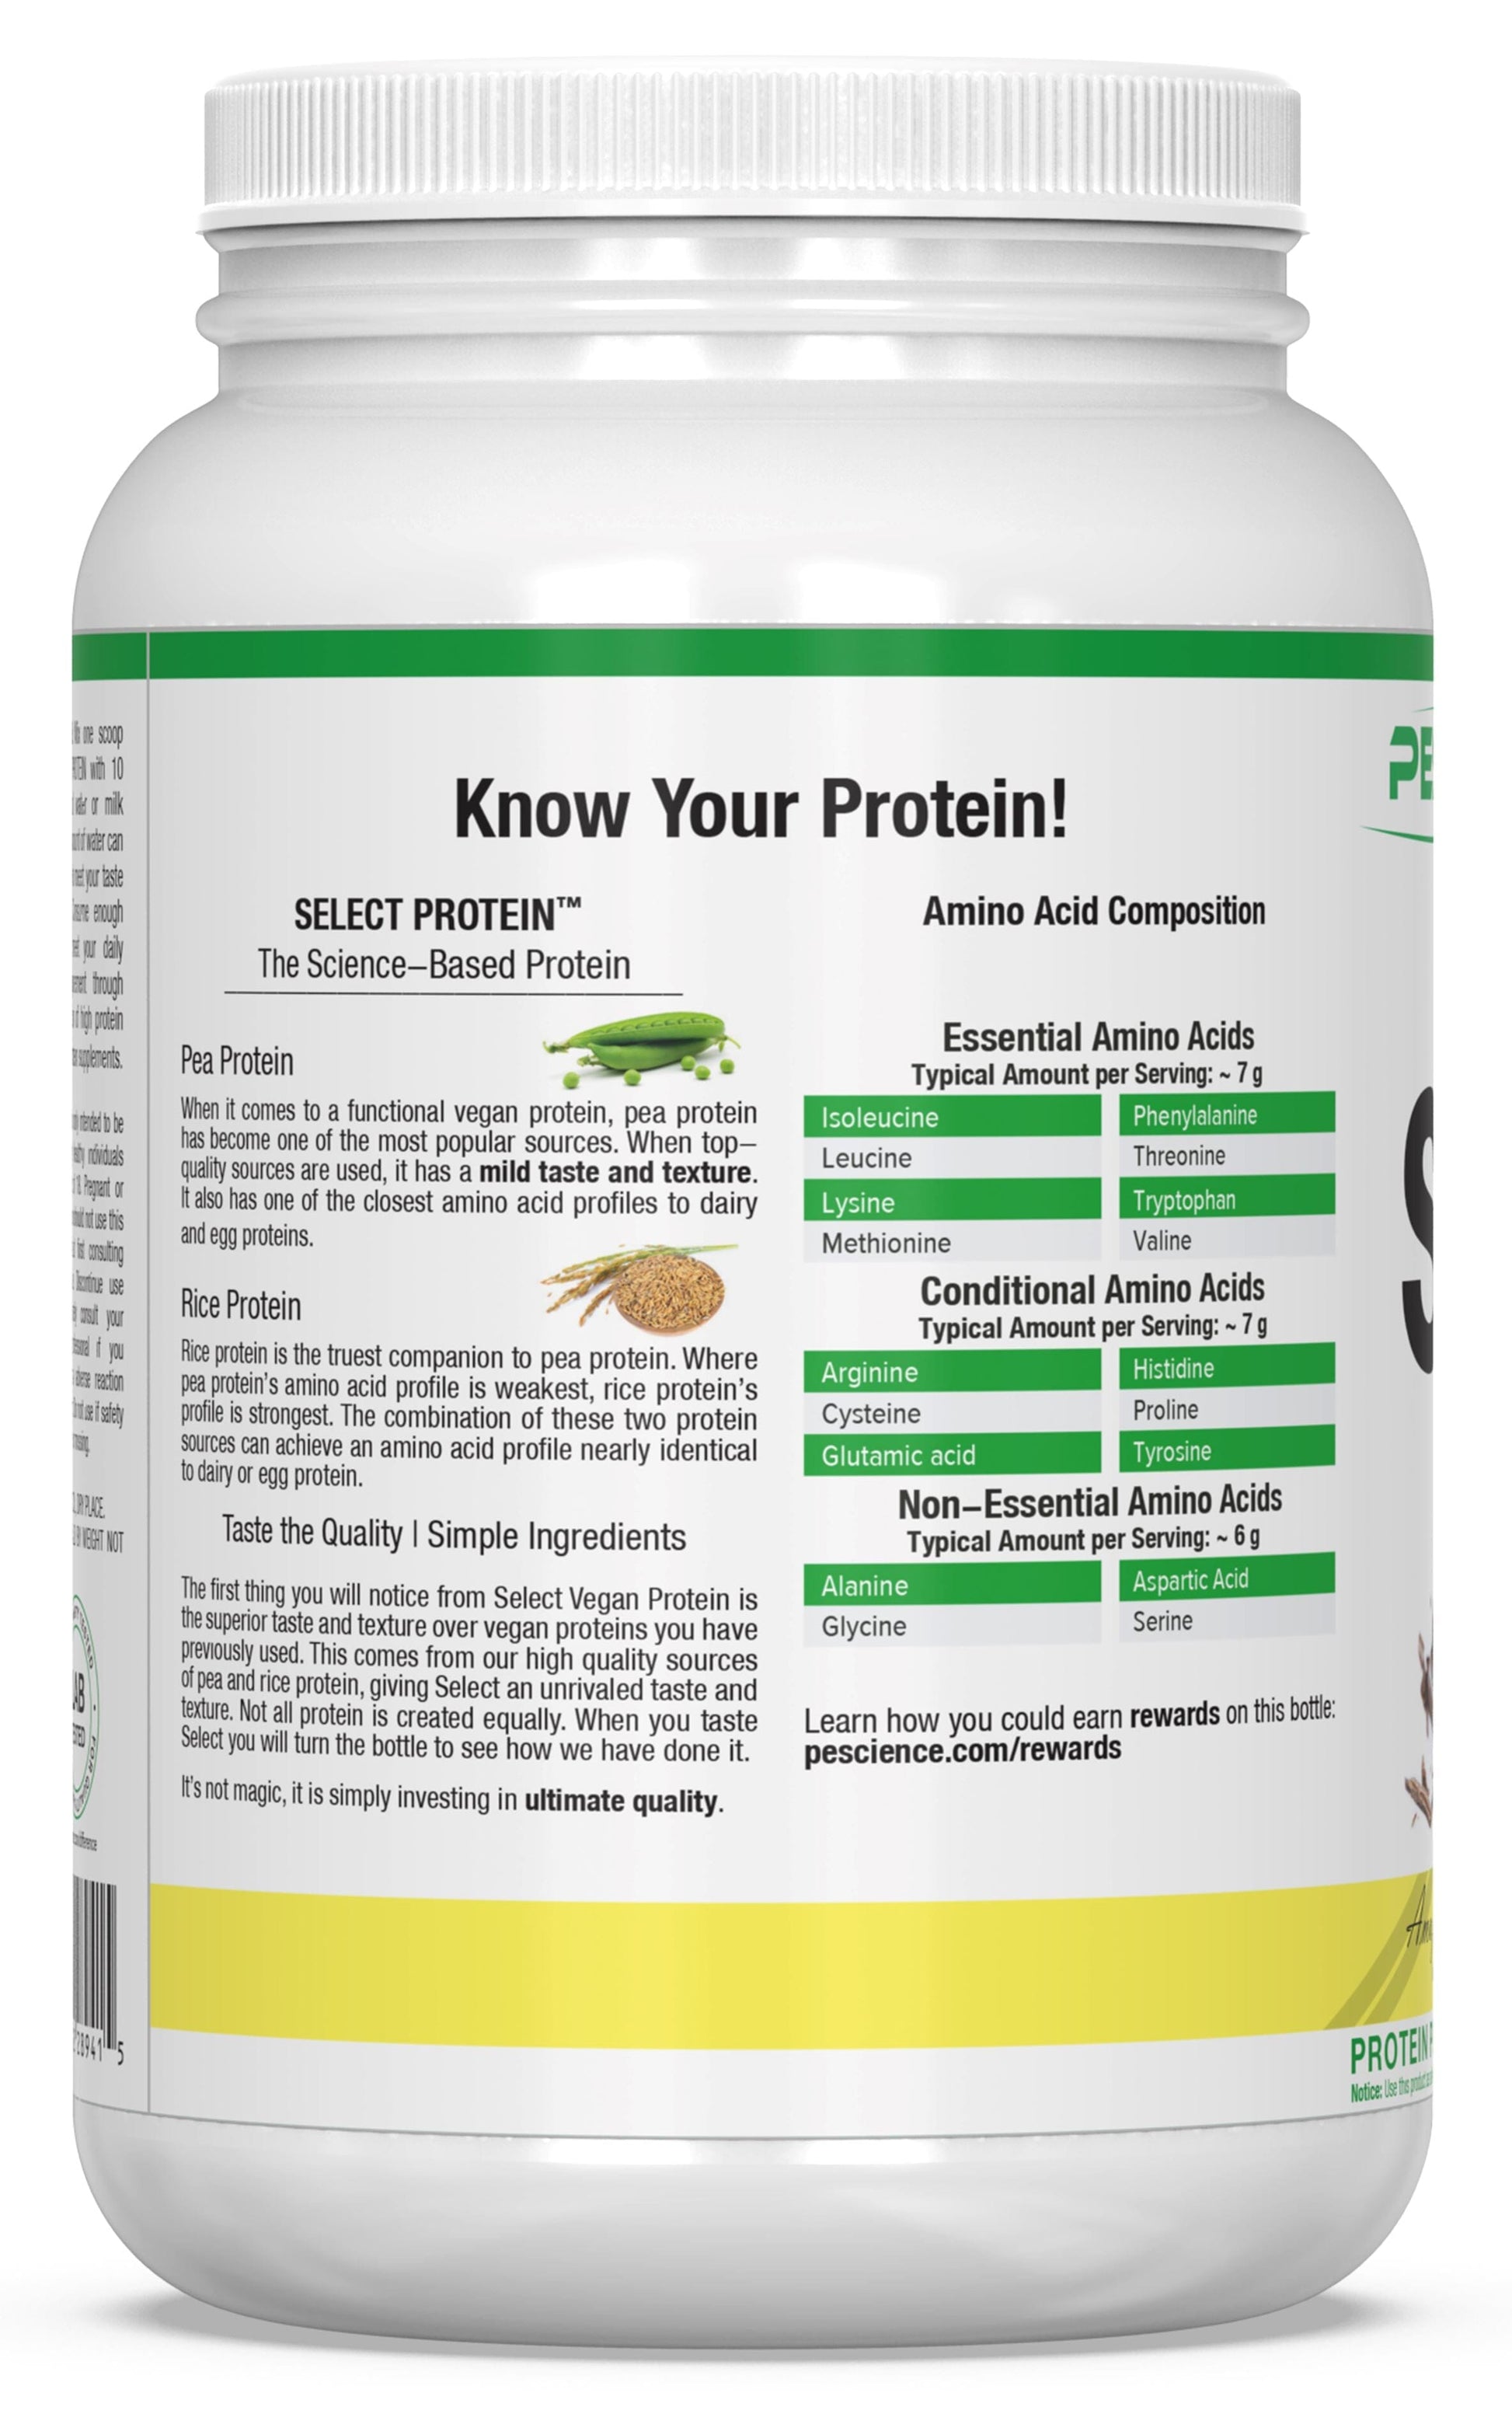 Select Vegan Protein Protein PEScienceCA 